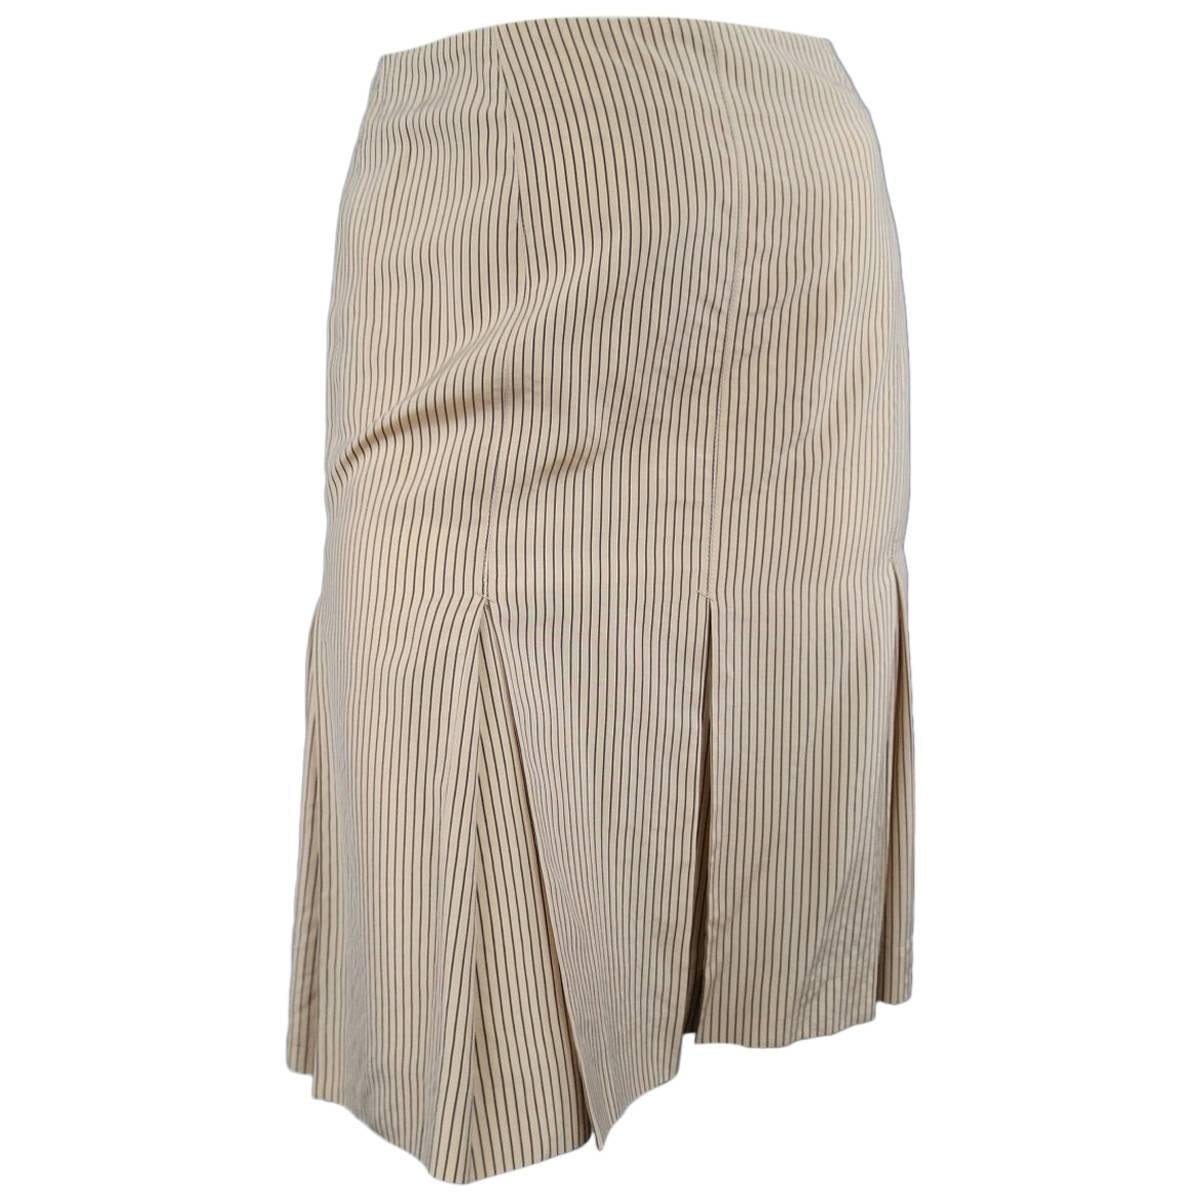 JEAN PAUL GAULTIER 6 Peach Beige & Brown Striped Rayon Silk Blend Pleated Skirt